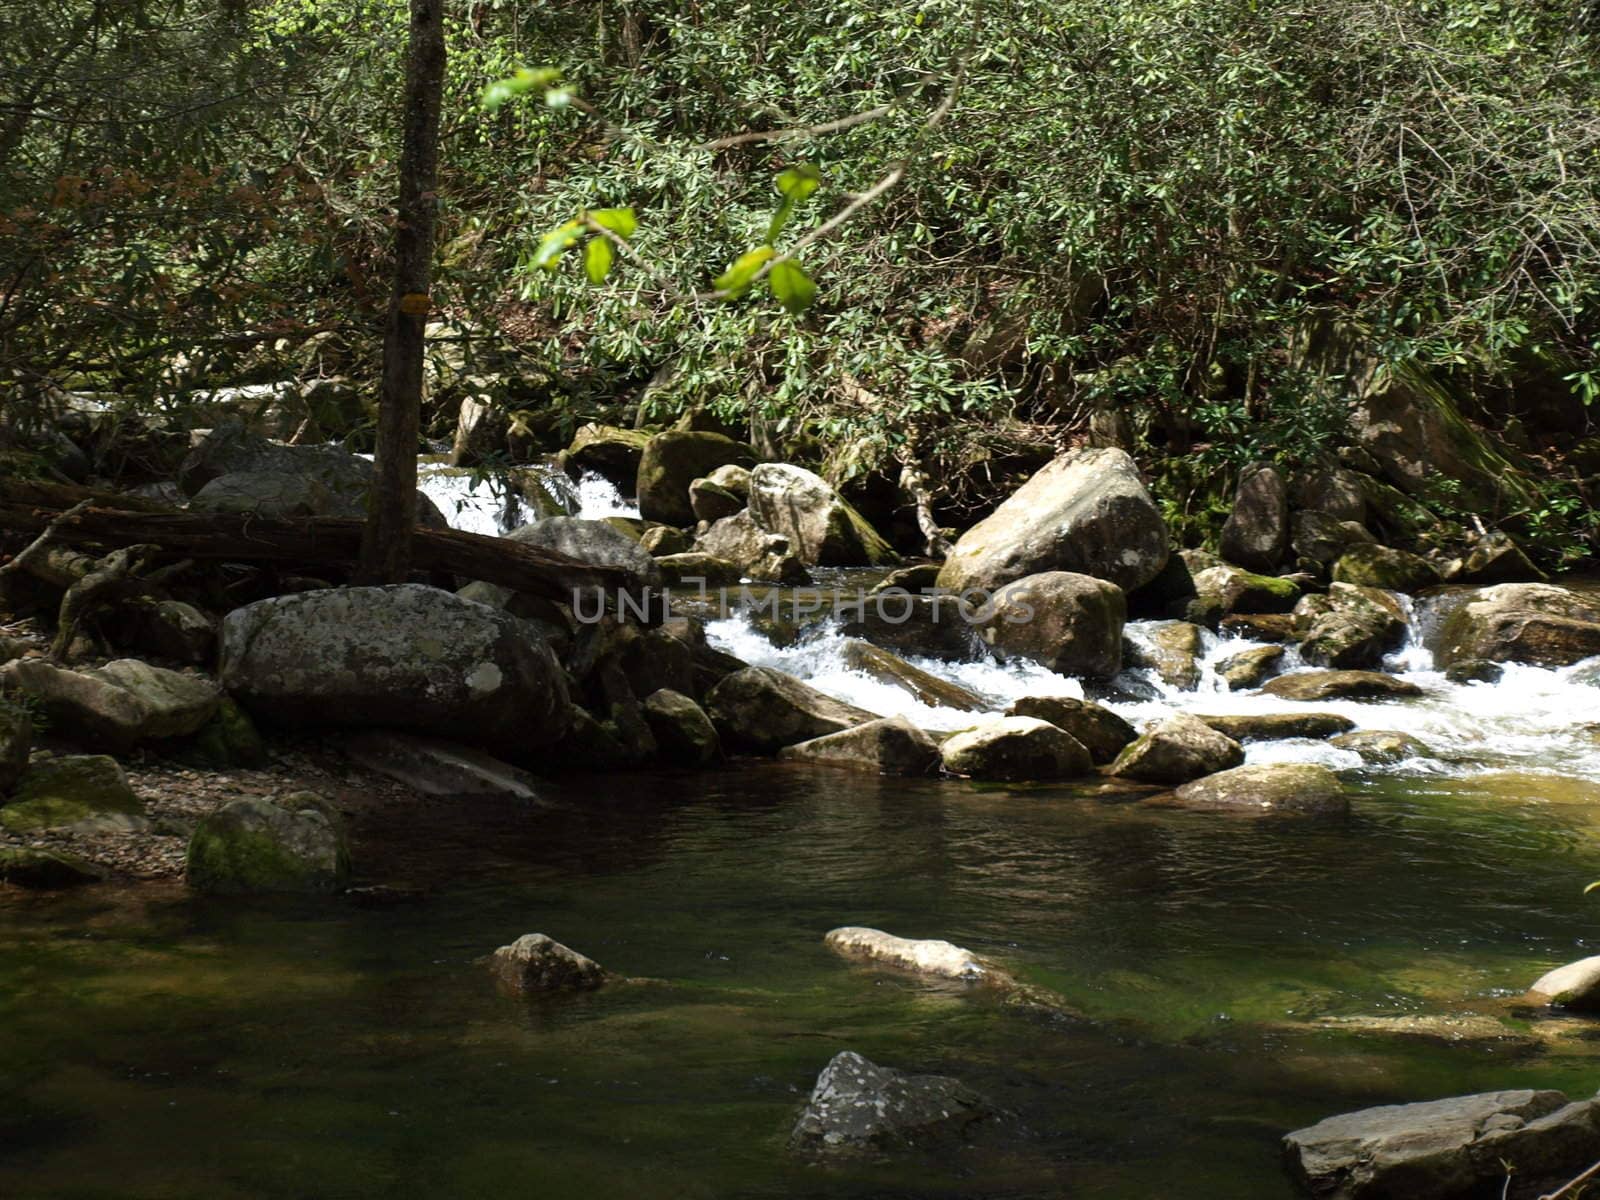 North Carolina stream by northwoodsphoto